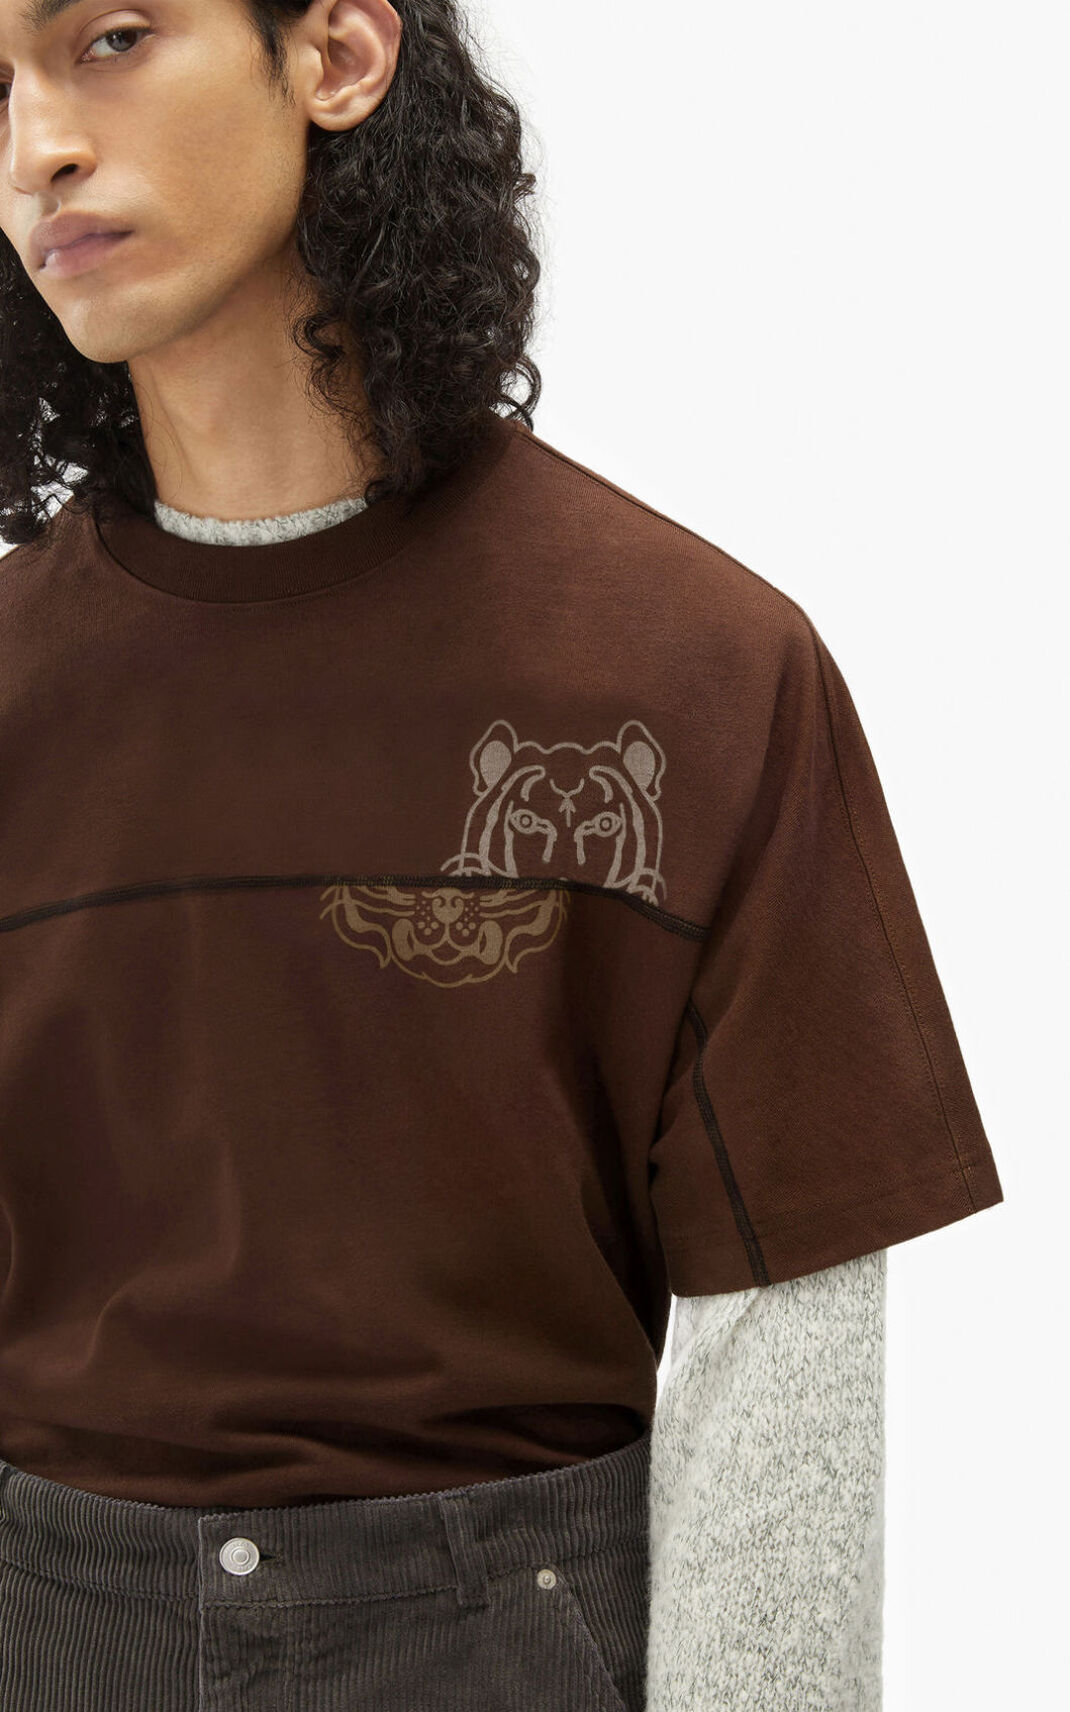 Camisetas Kenzo K Tiger oversized Hombre Marrones Oscuro - SKU.9518743